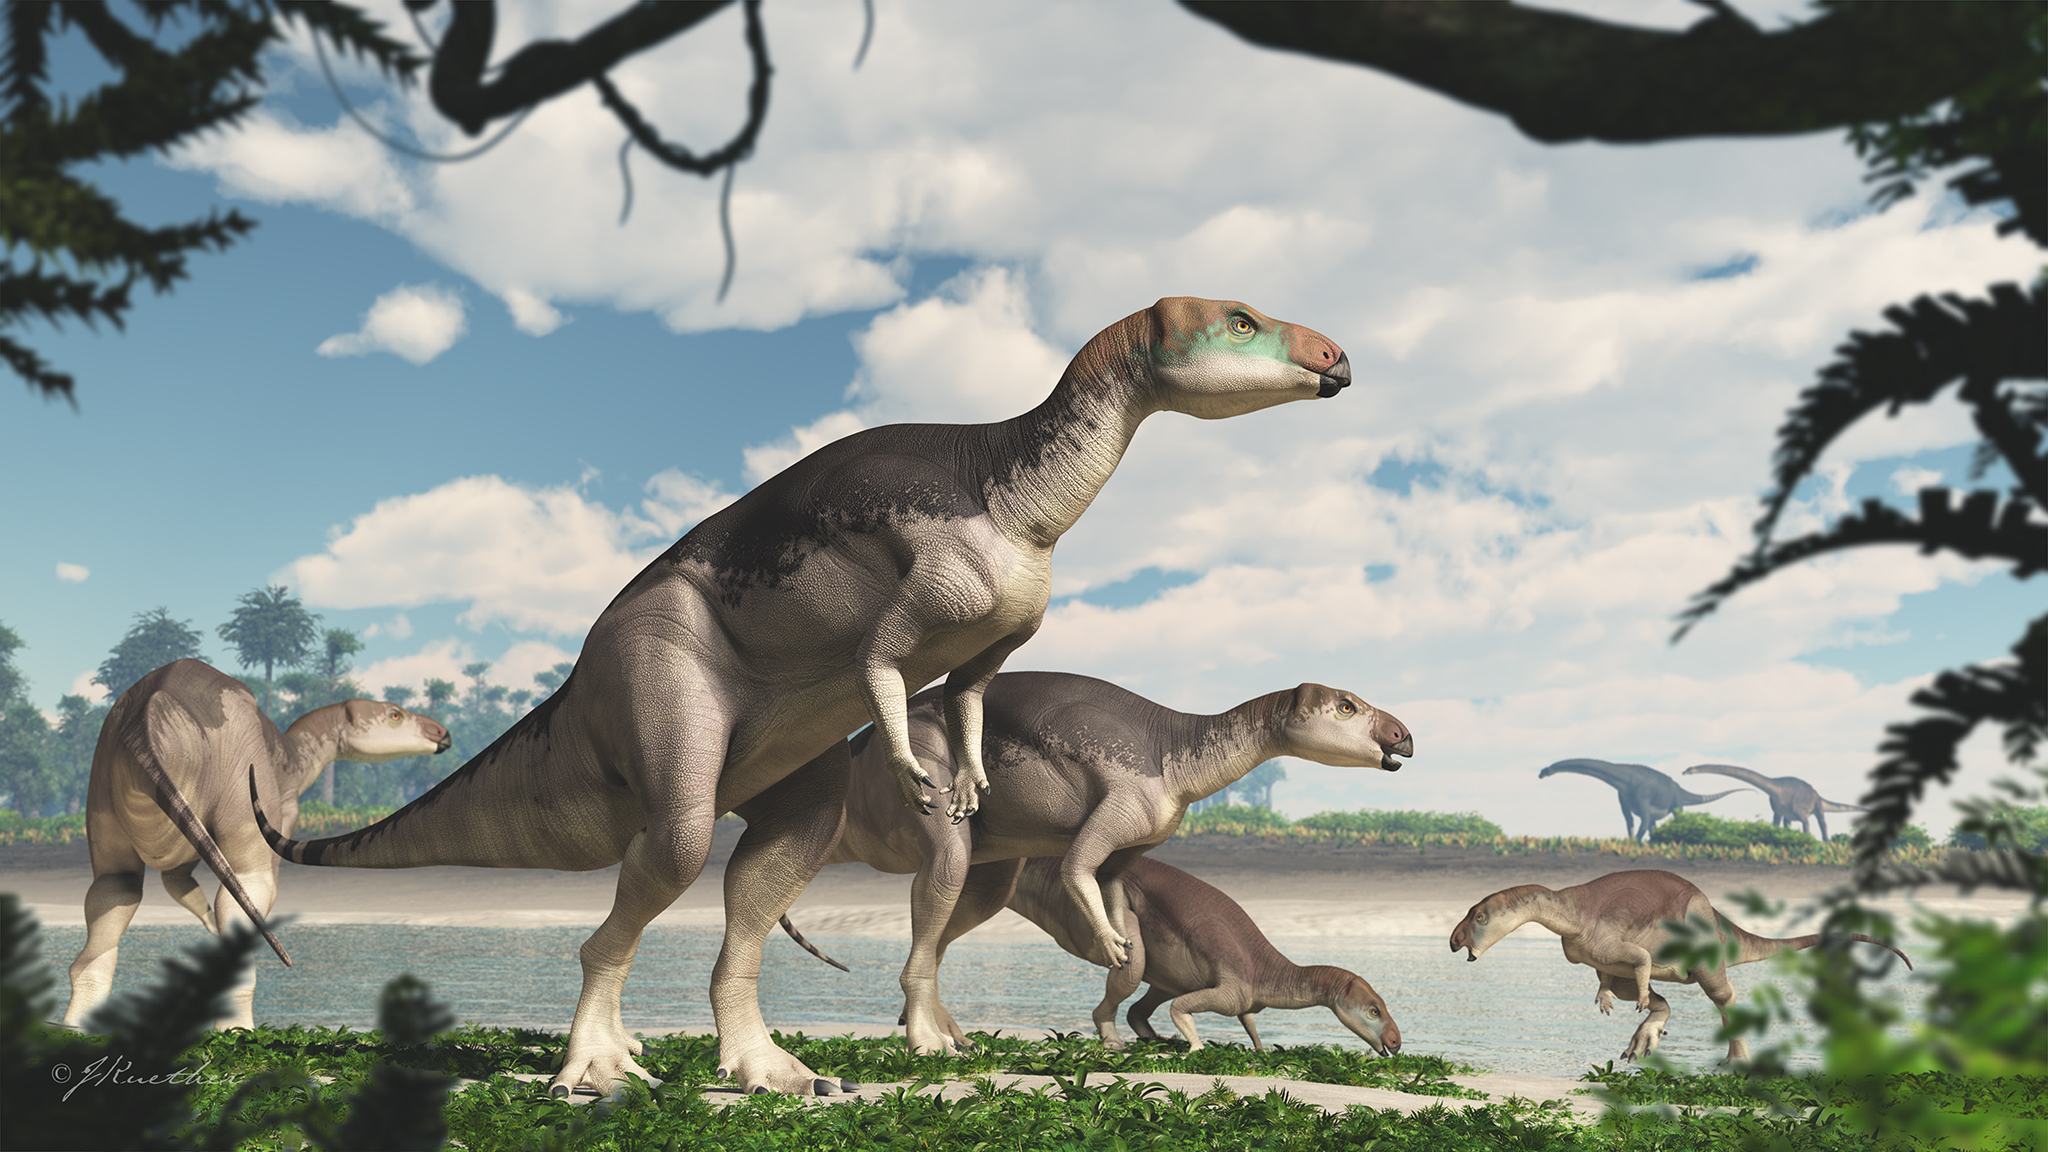 Exclusive Gem Like Fossils Reveal Stunning New Dinosaur Species